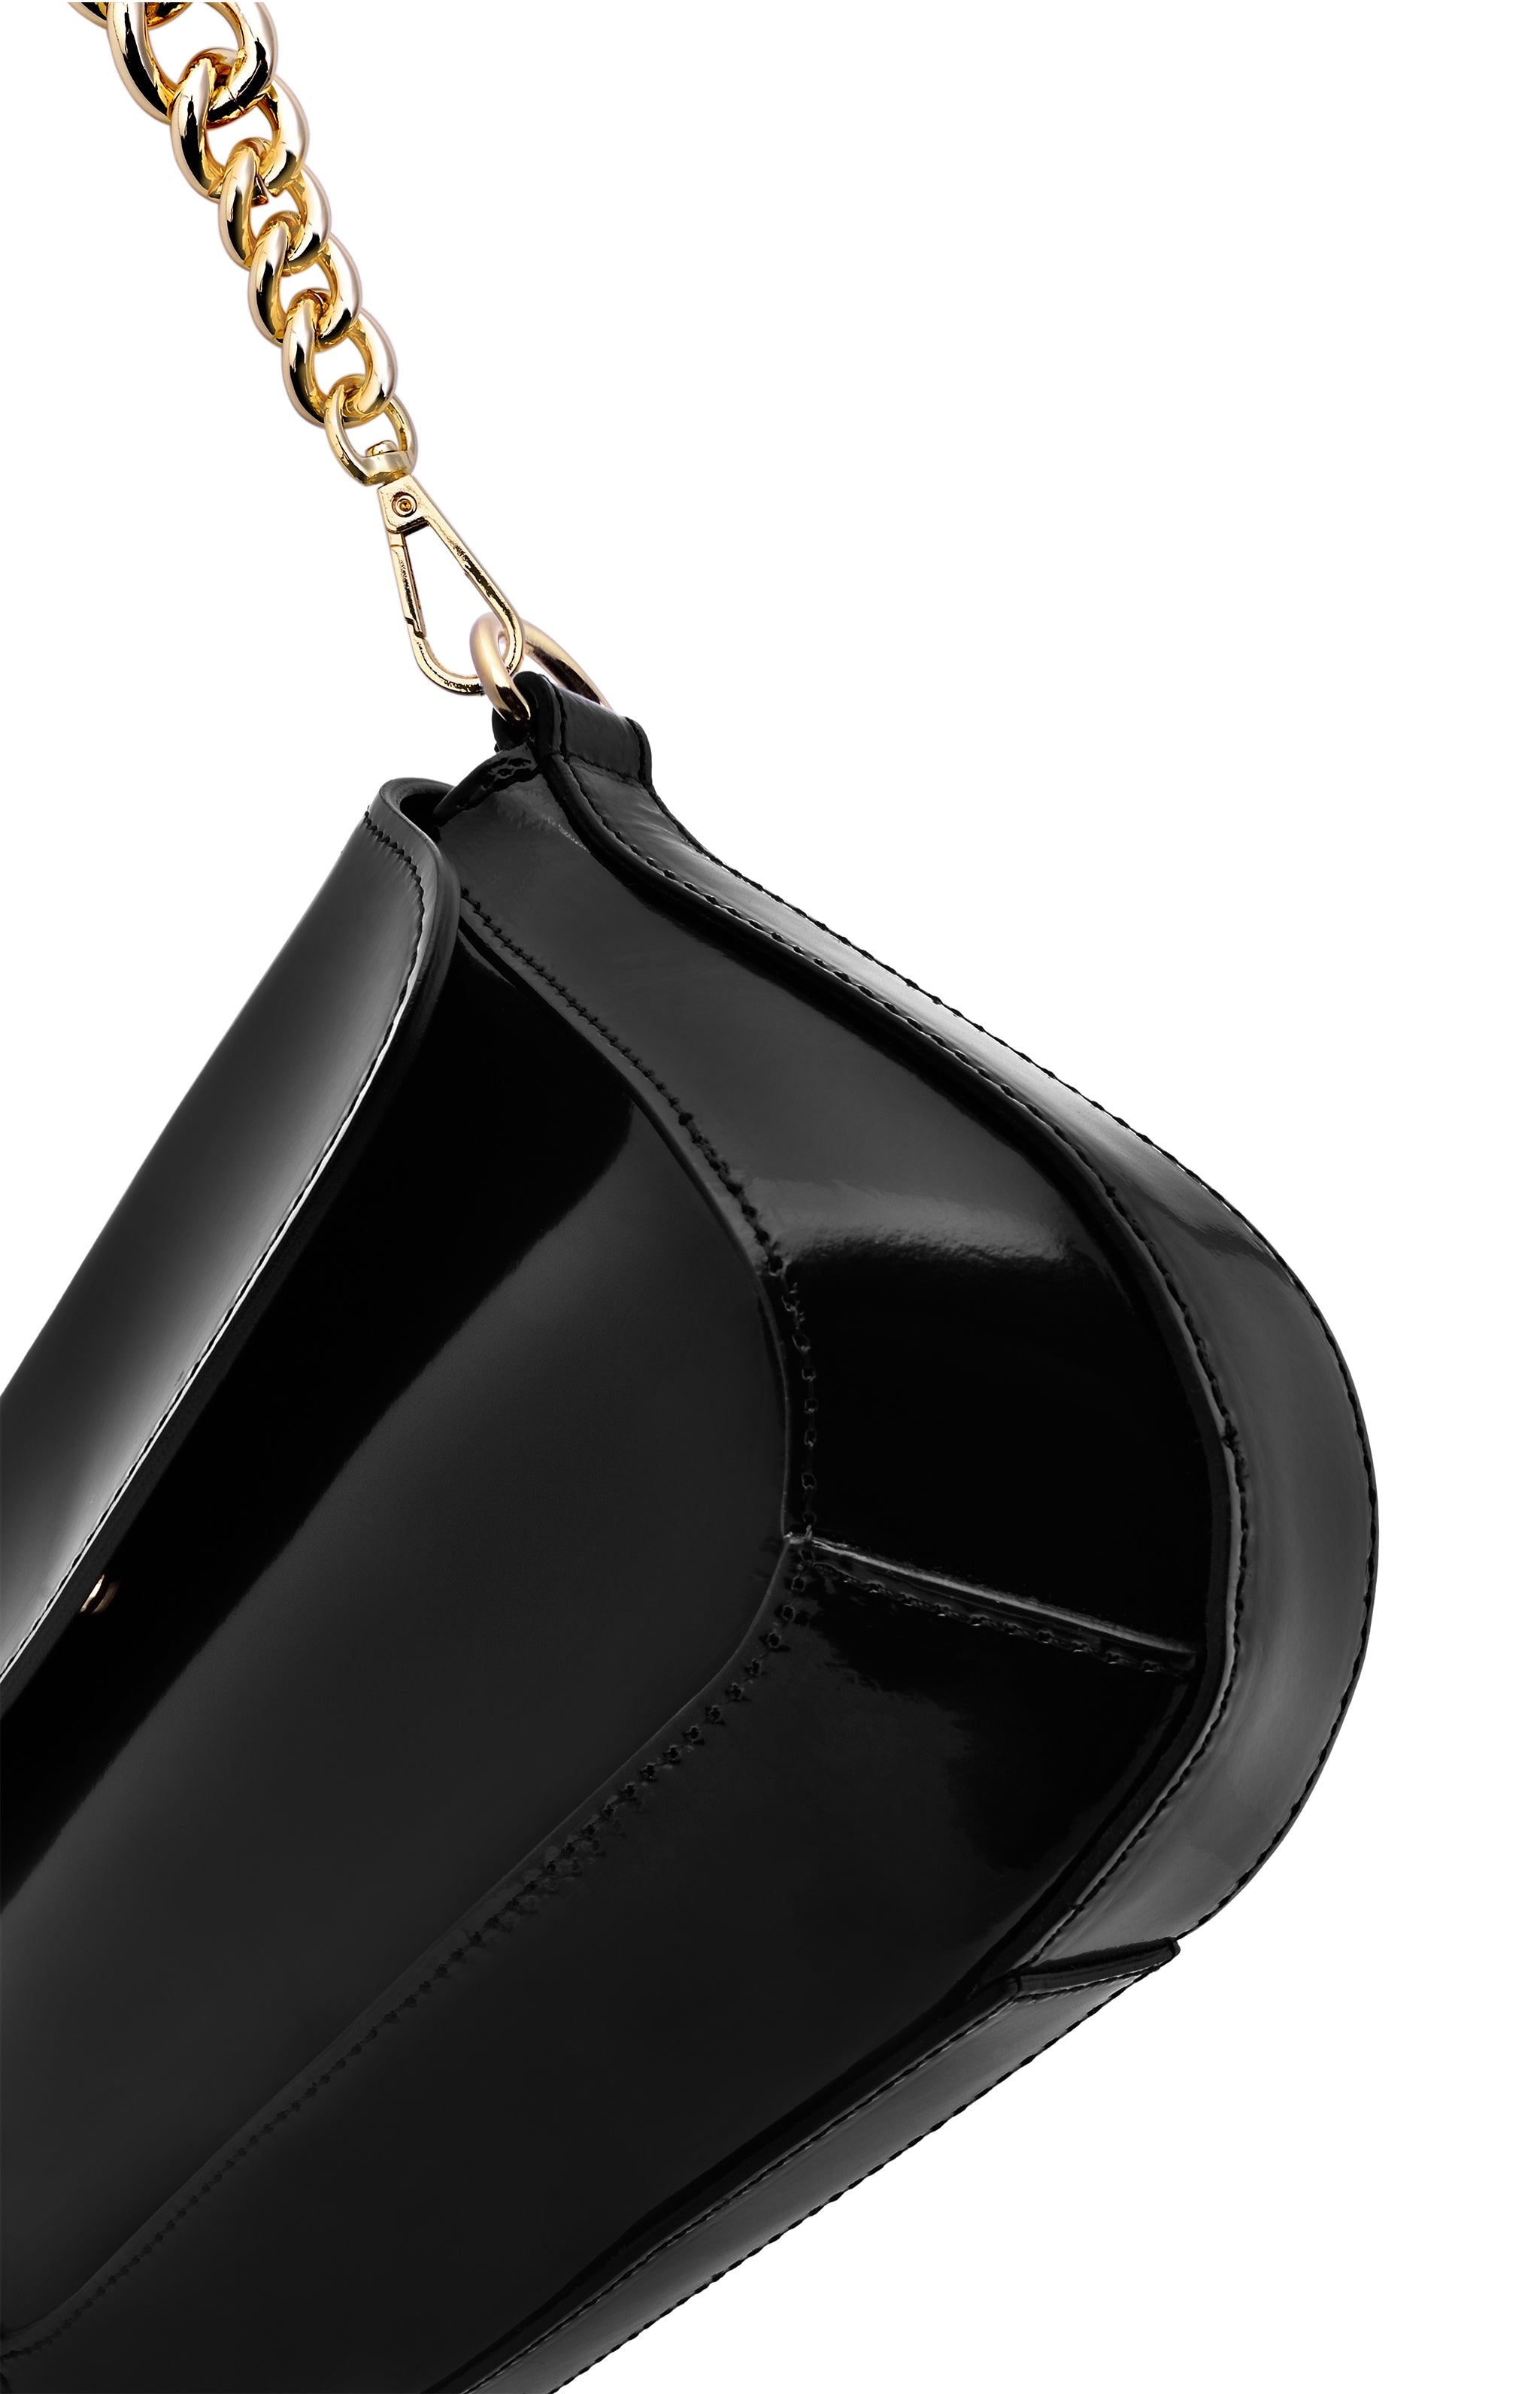 Ena Black Semi Patent Leather Shoulder Bag CL10534 NERO - 9